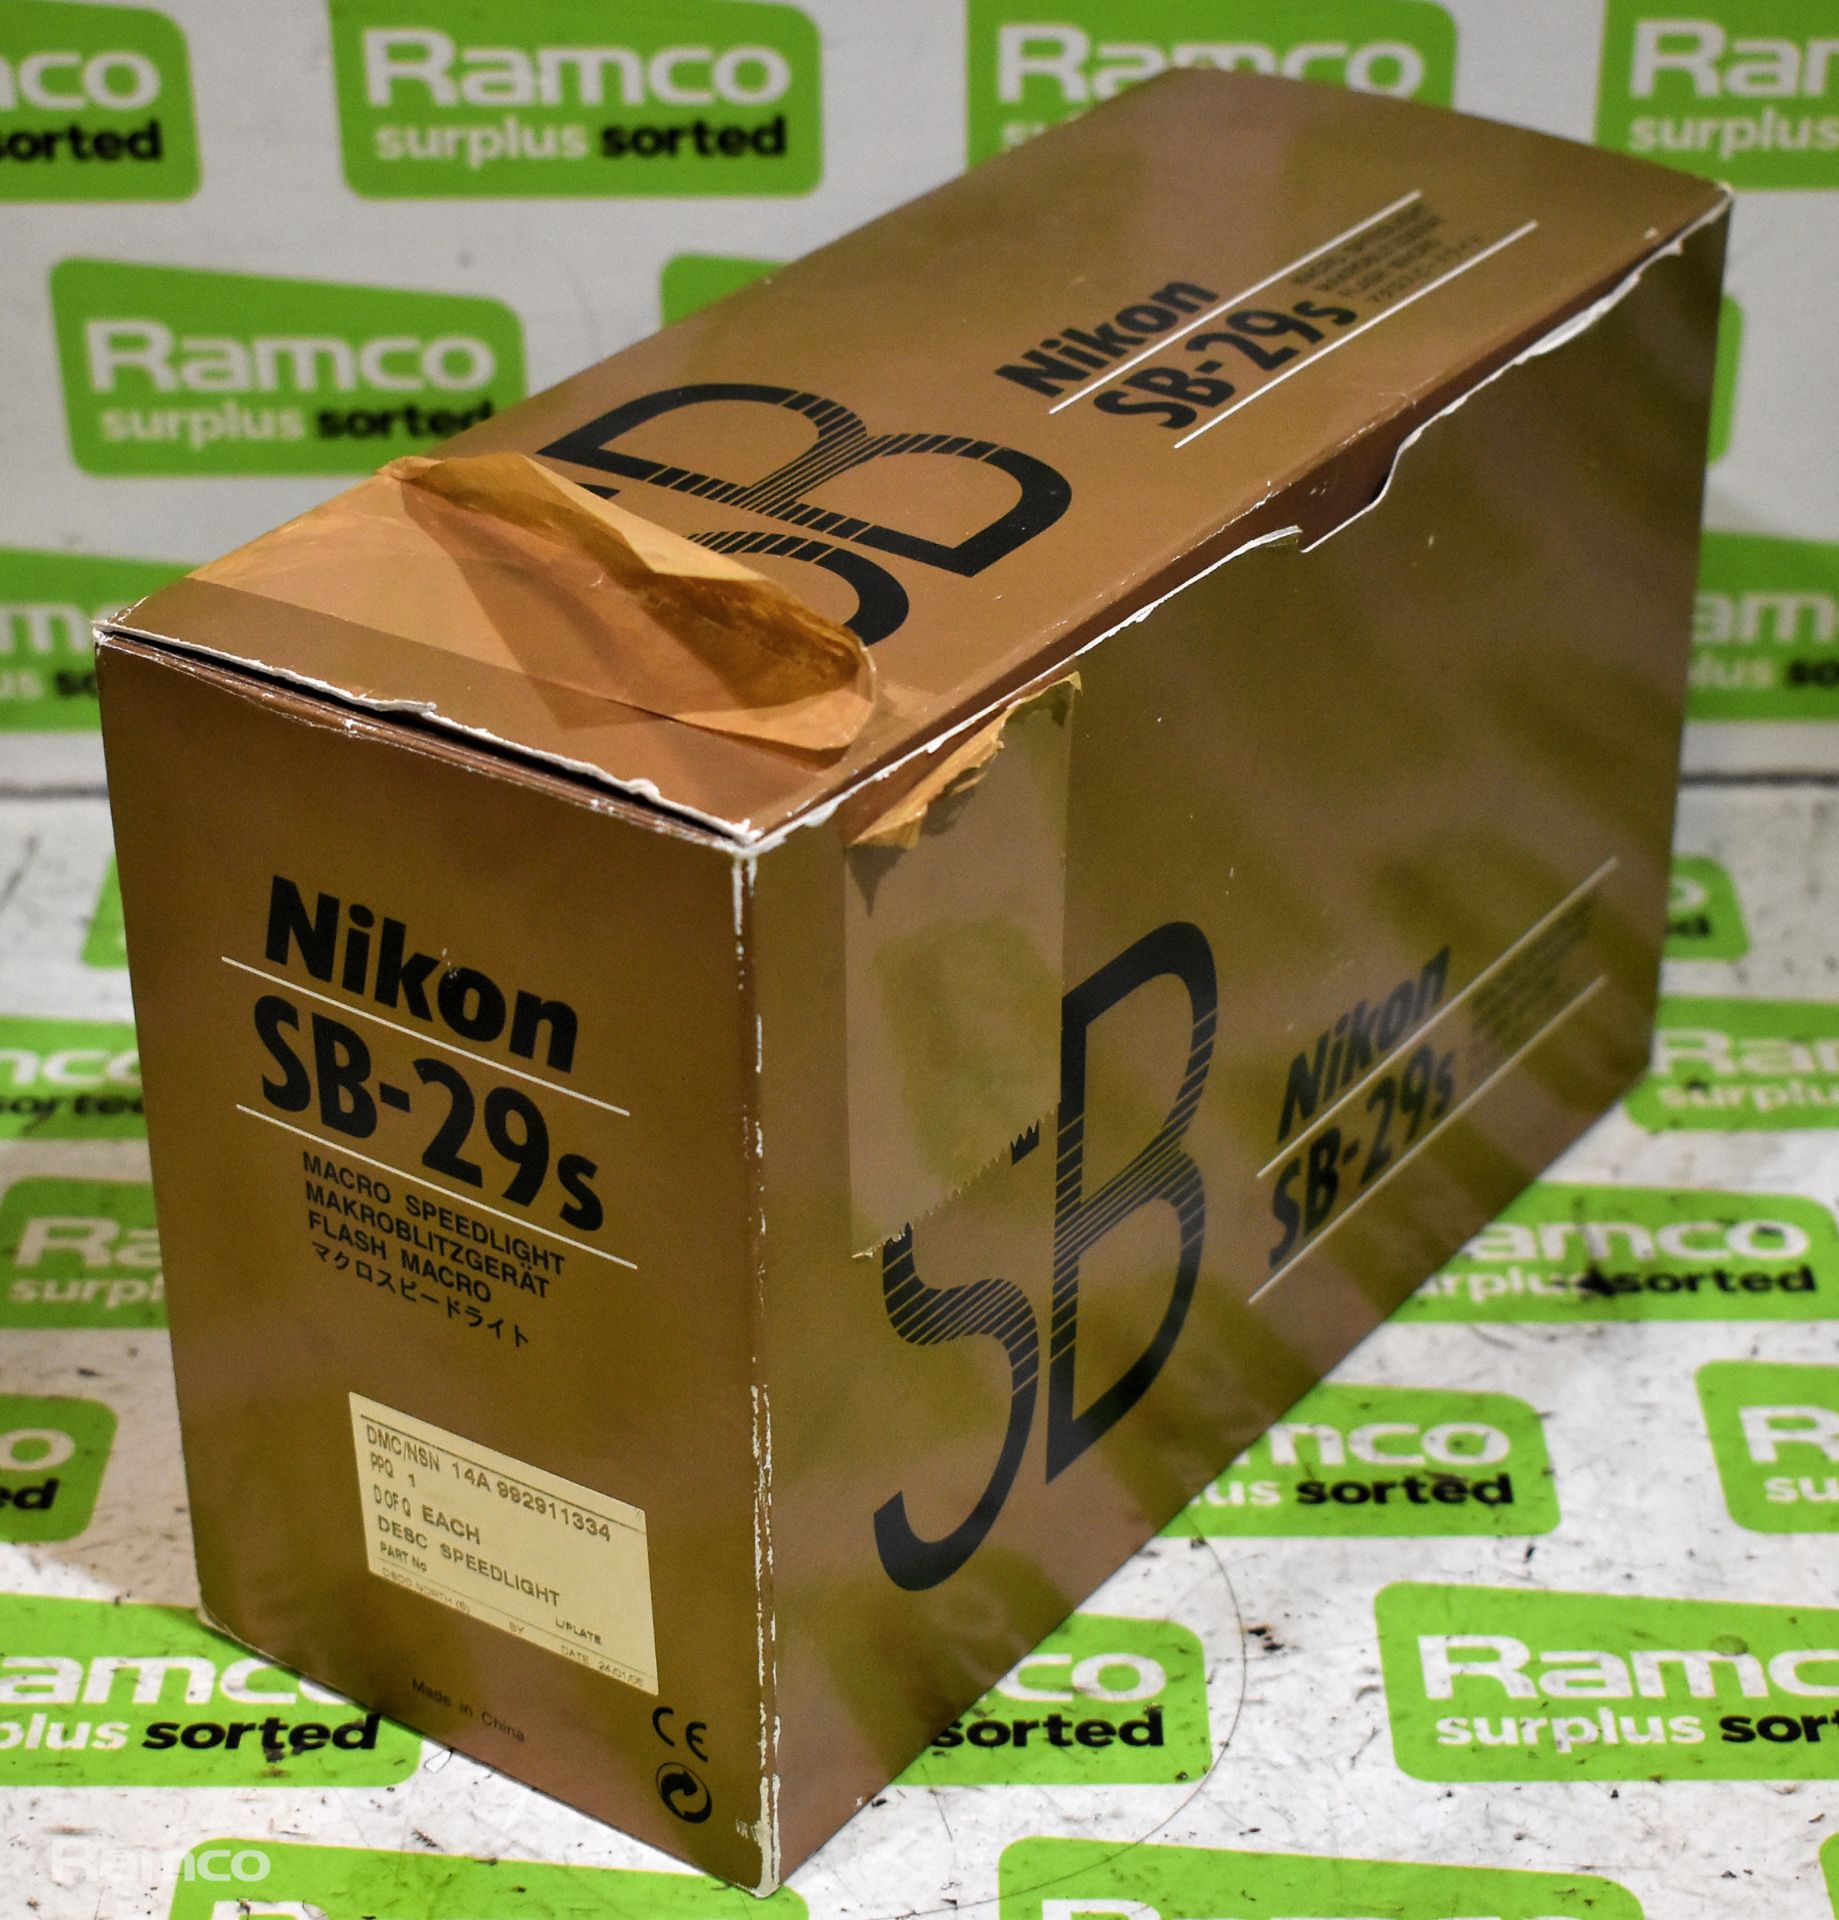 Nikon SB-29S Macro Speedlight flash ring light with case - Image 7 of 7